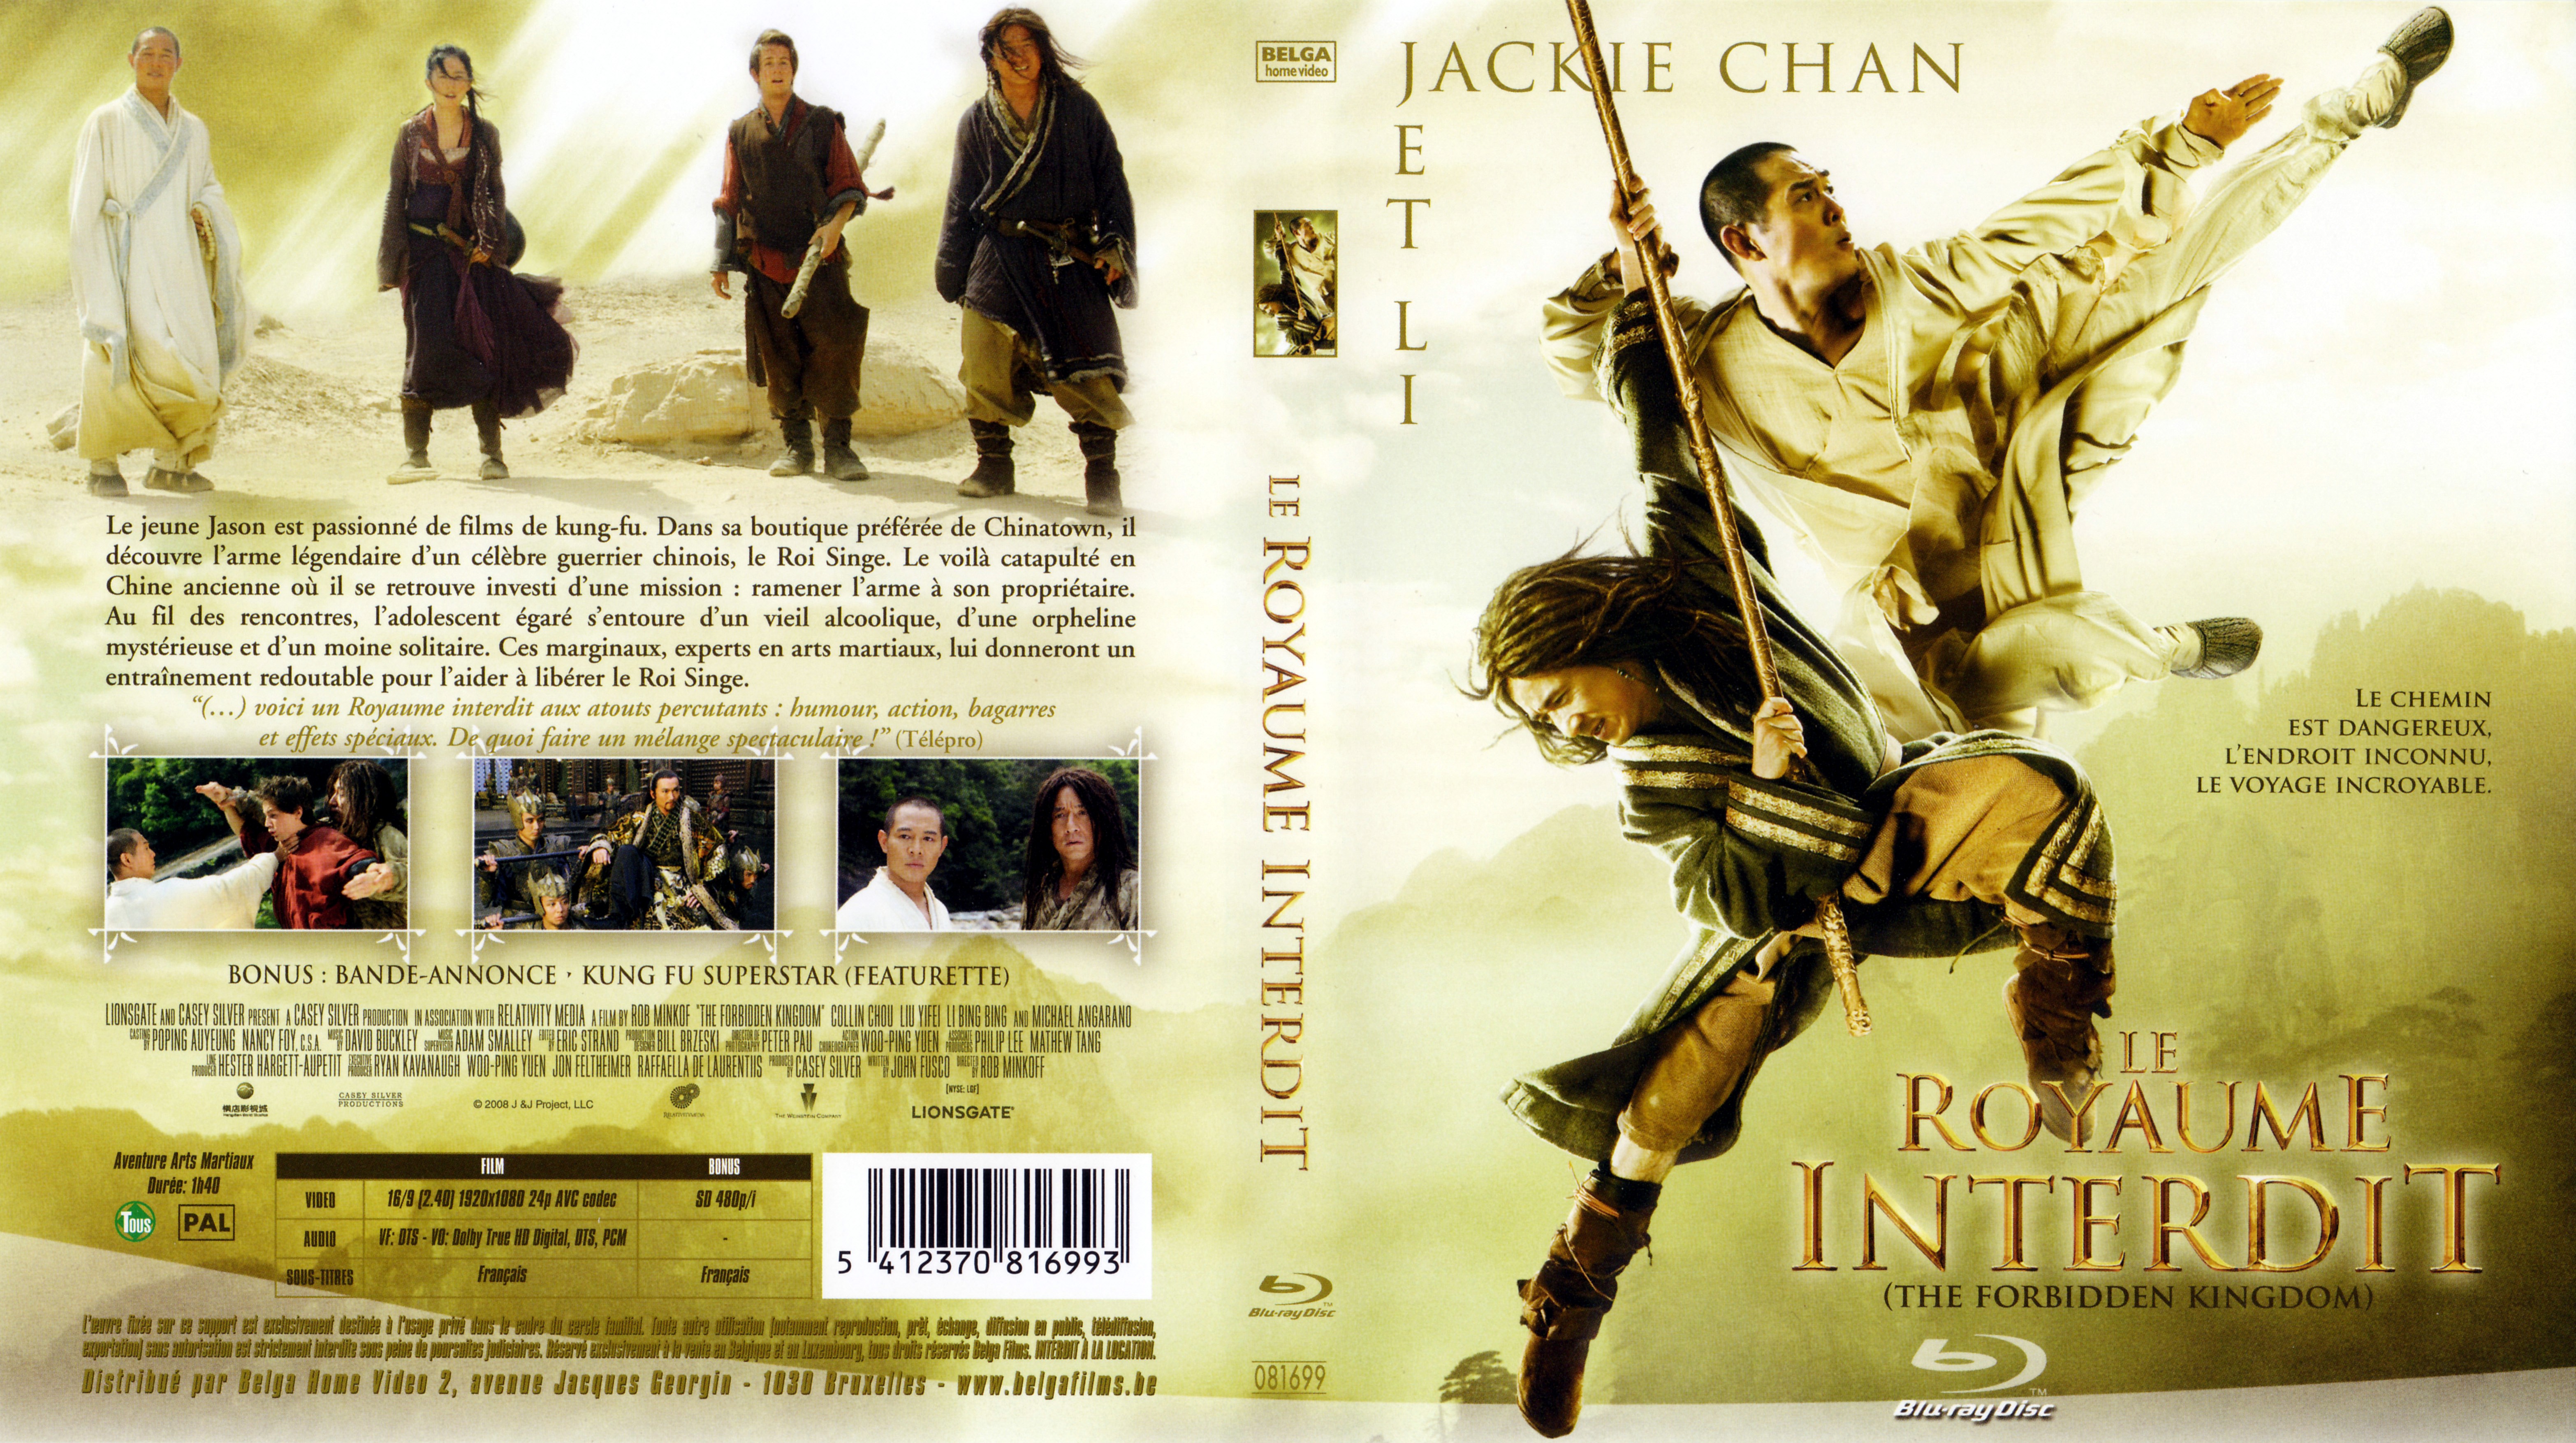 Jaquette DVD Le royaume interdit (BLU-RAY) v3